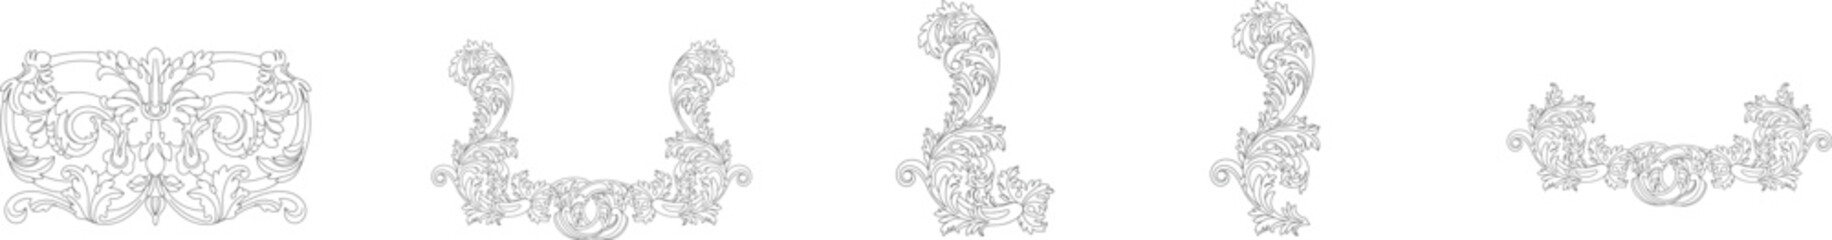 Set of vintage baroque ornament, corner. Retro pattern antique style acanthus. Decorative design element filigree calligraphy vector. - stock vector	
